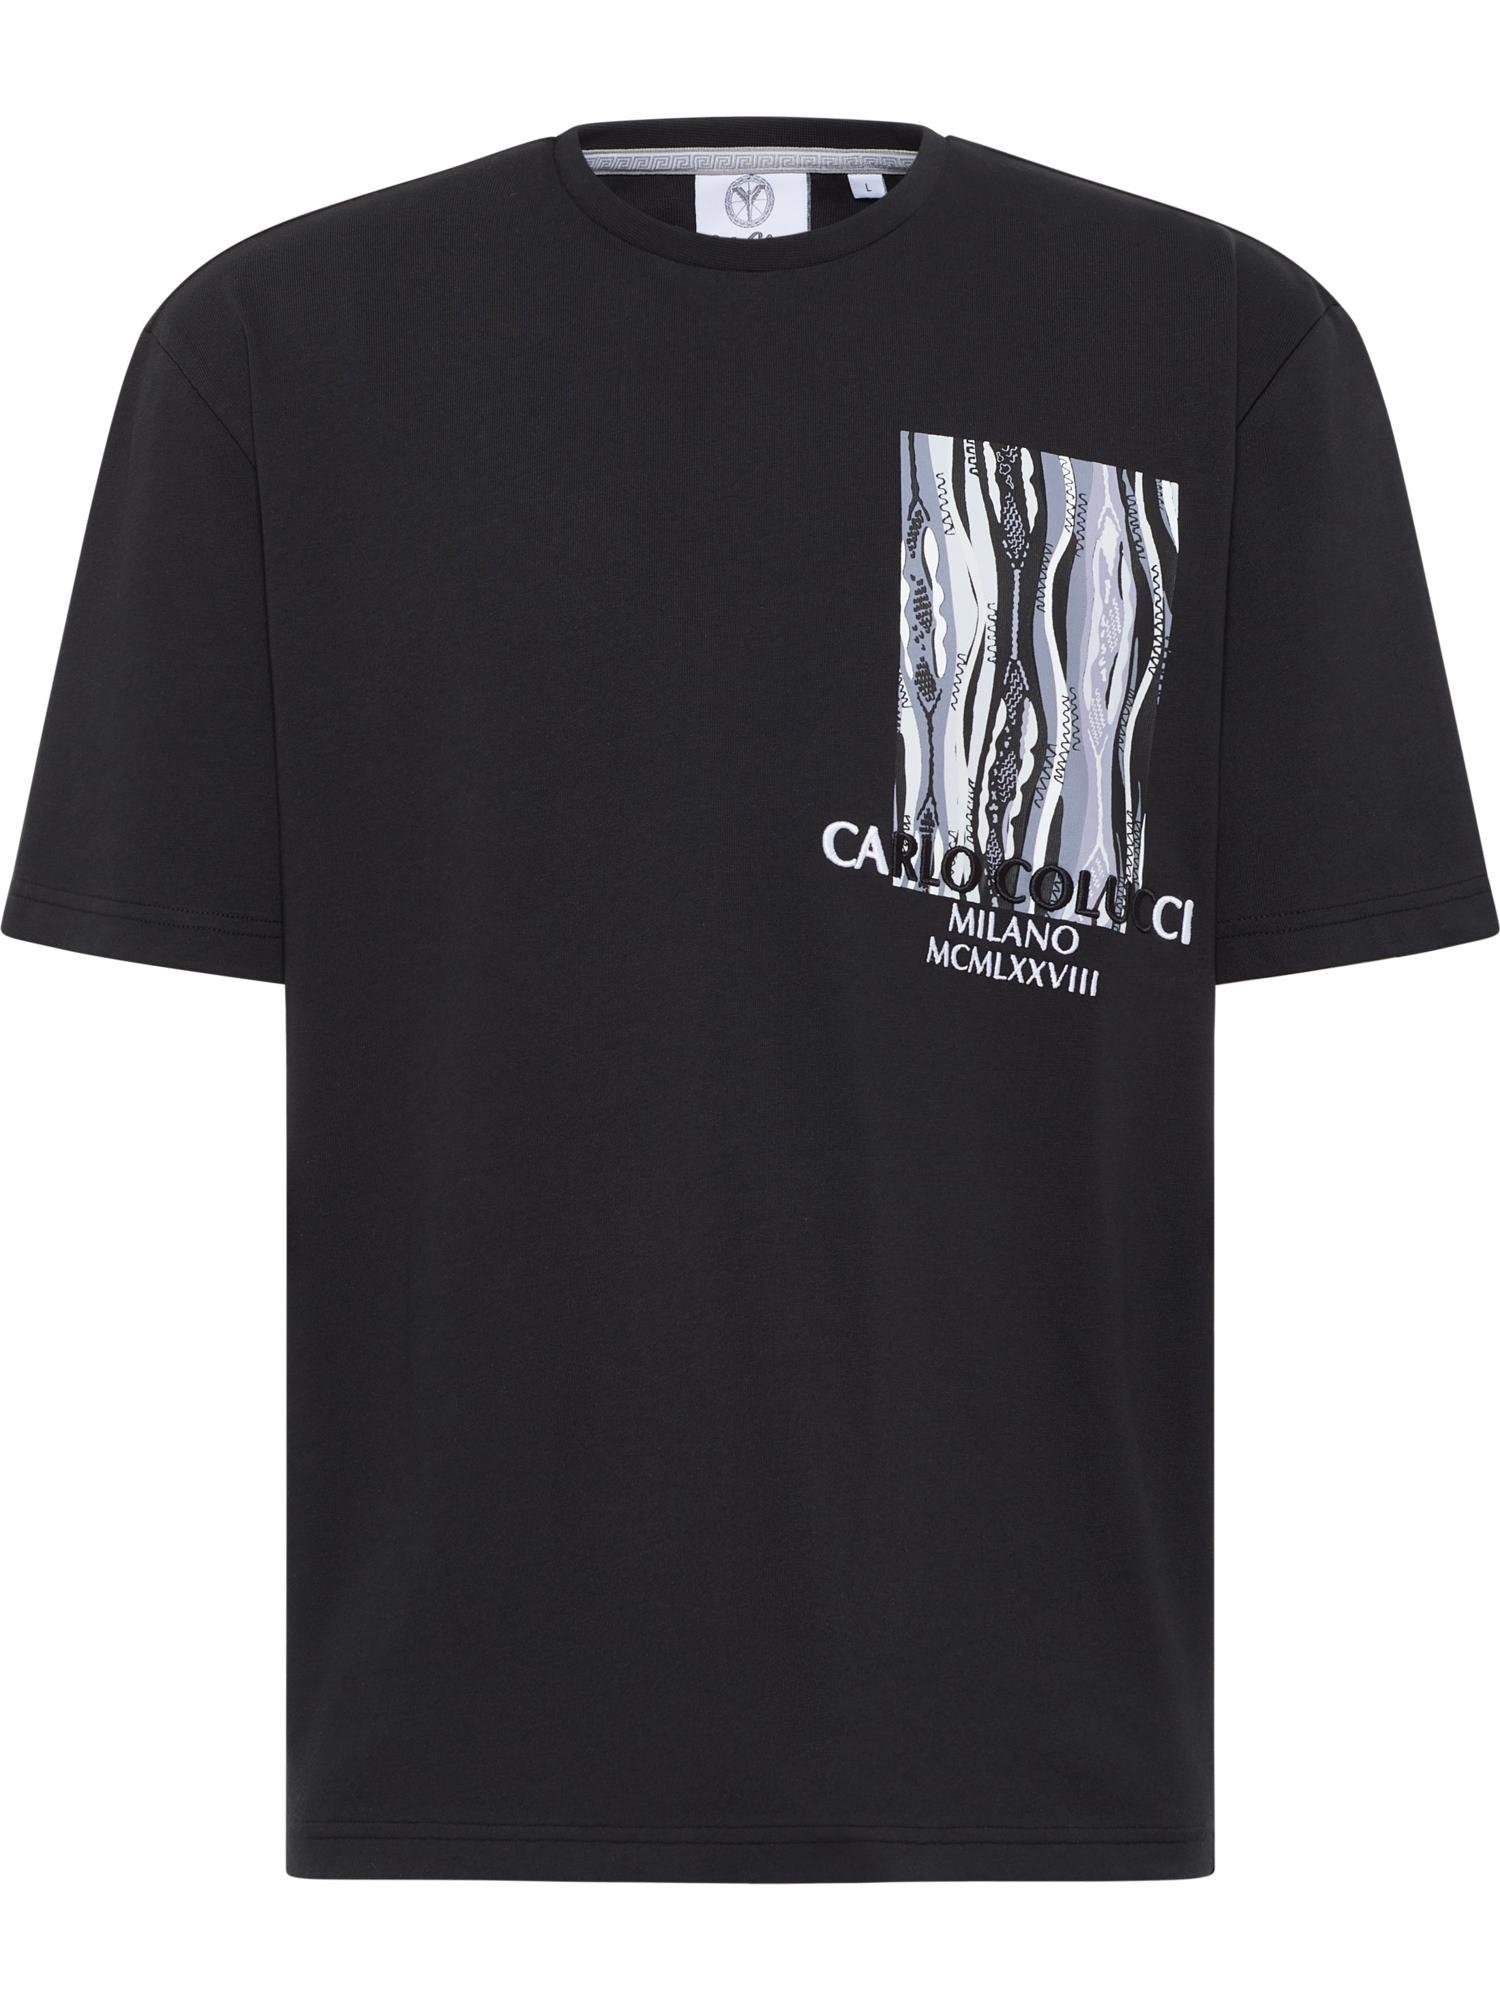 Pandis De Schwarz T-Shirt CARLO COLUCCI